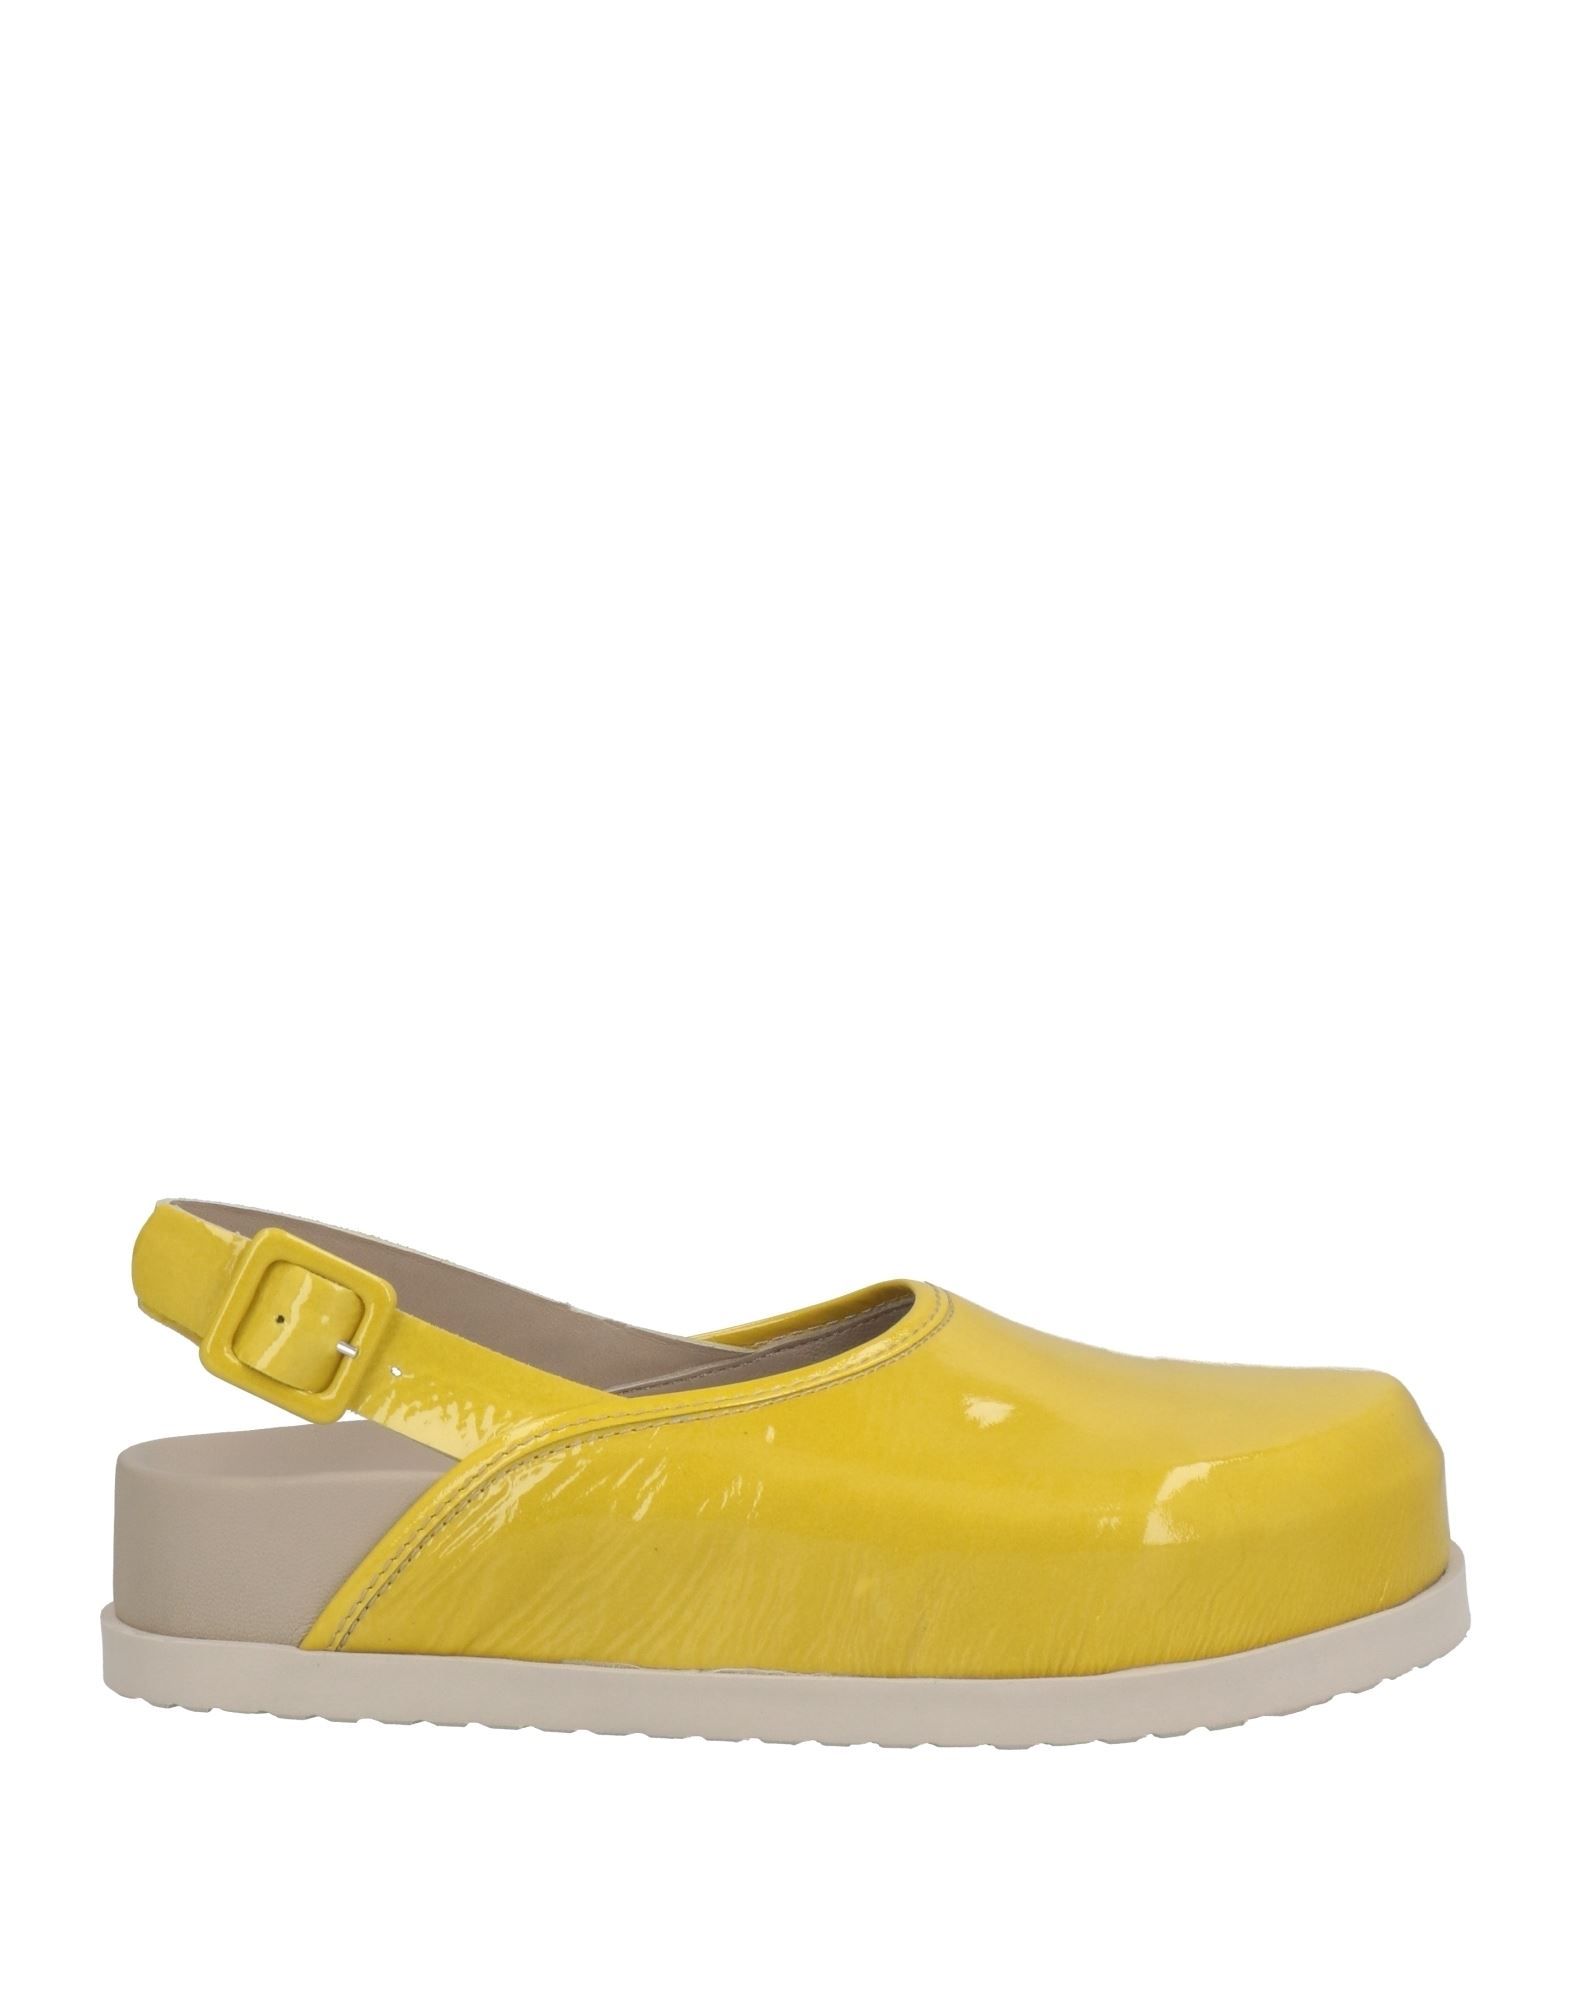 Patrizia Bonfanti Woman Mules & Clogs Yellow Size 6 Soft Leather